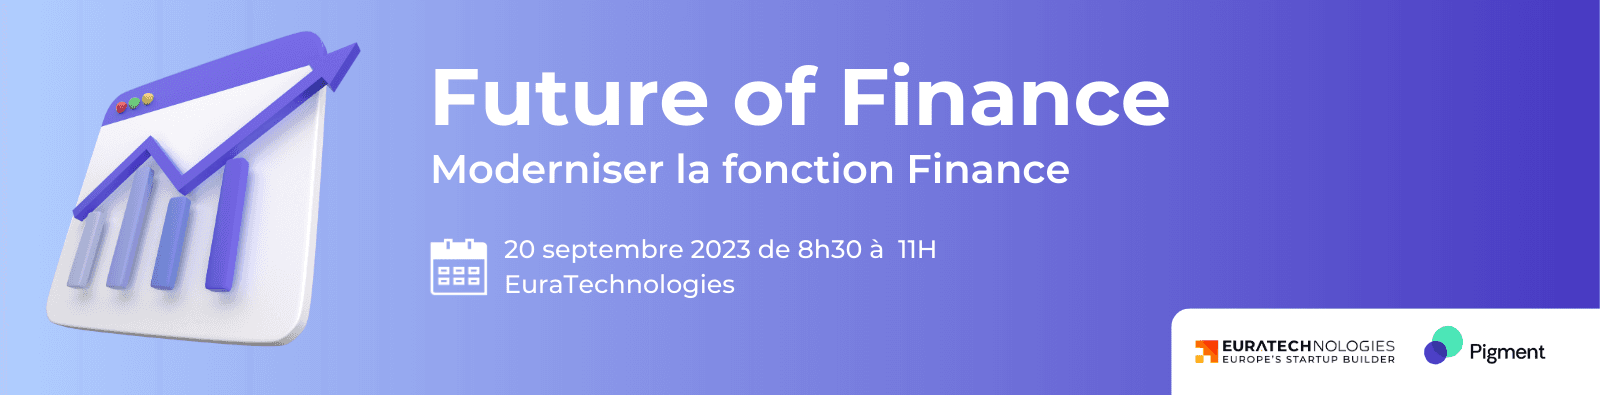 Future of Finance - Moderniser la fonction Finance